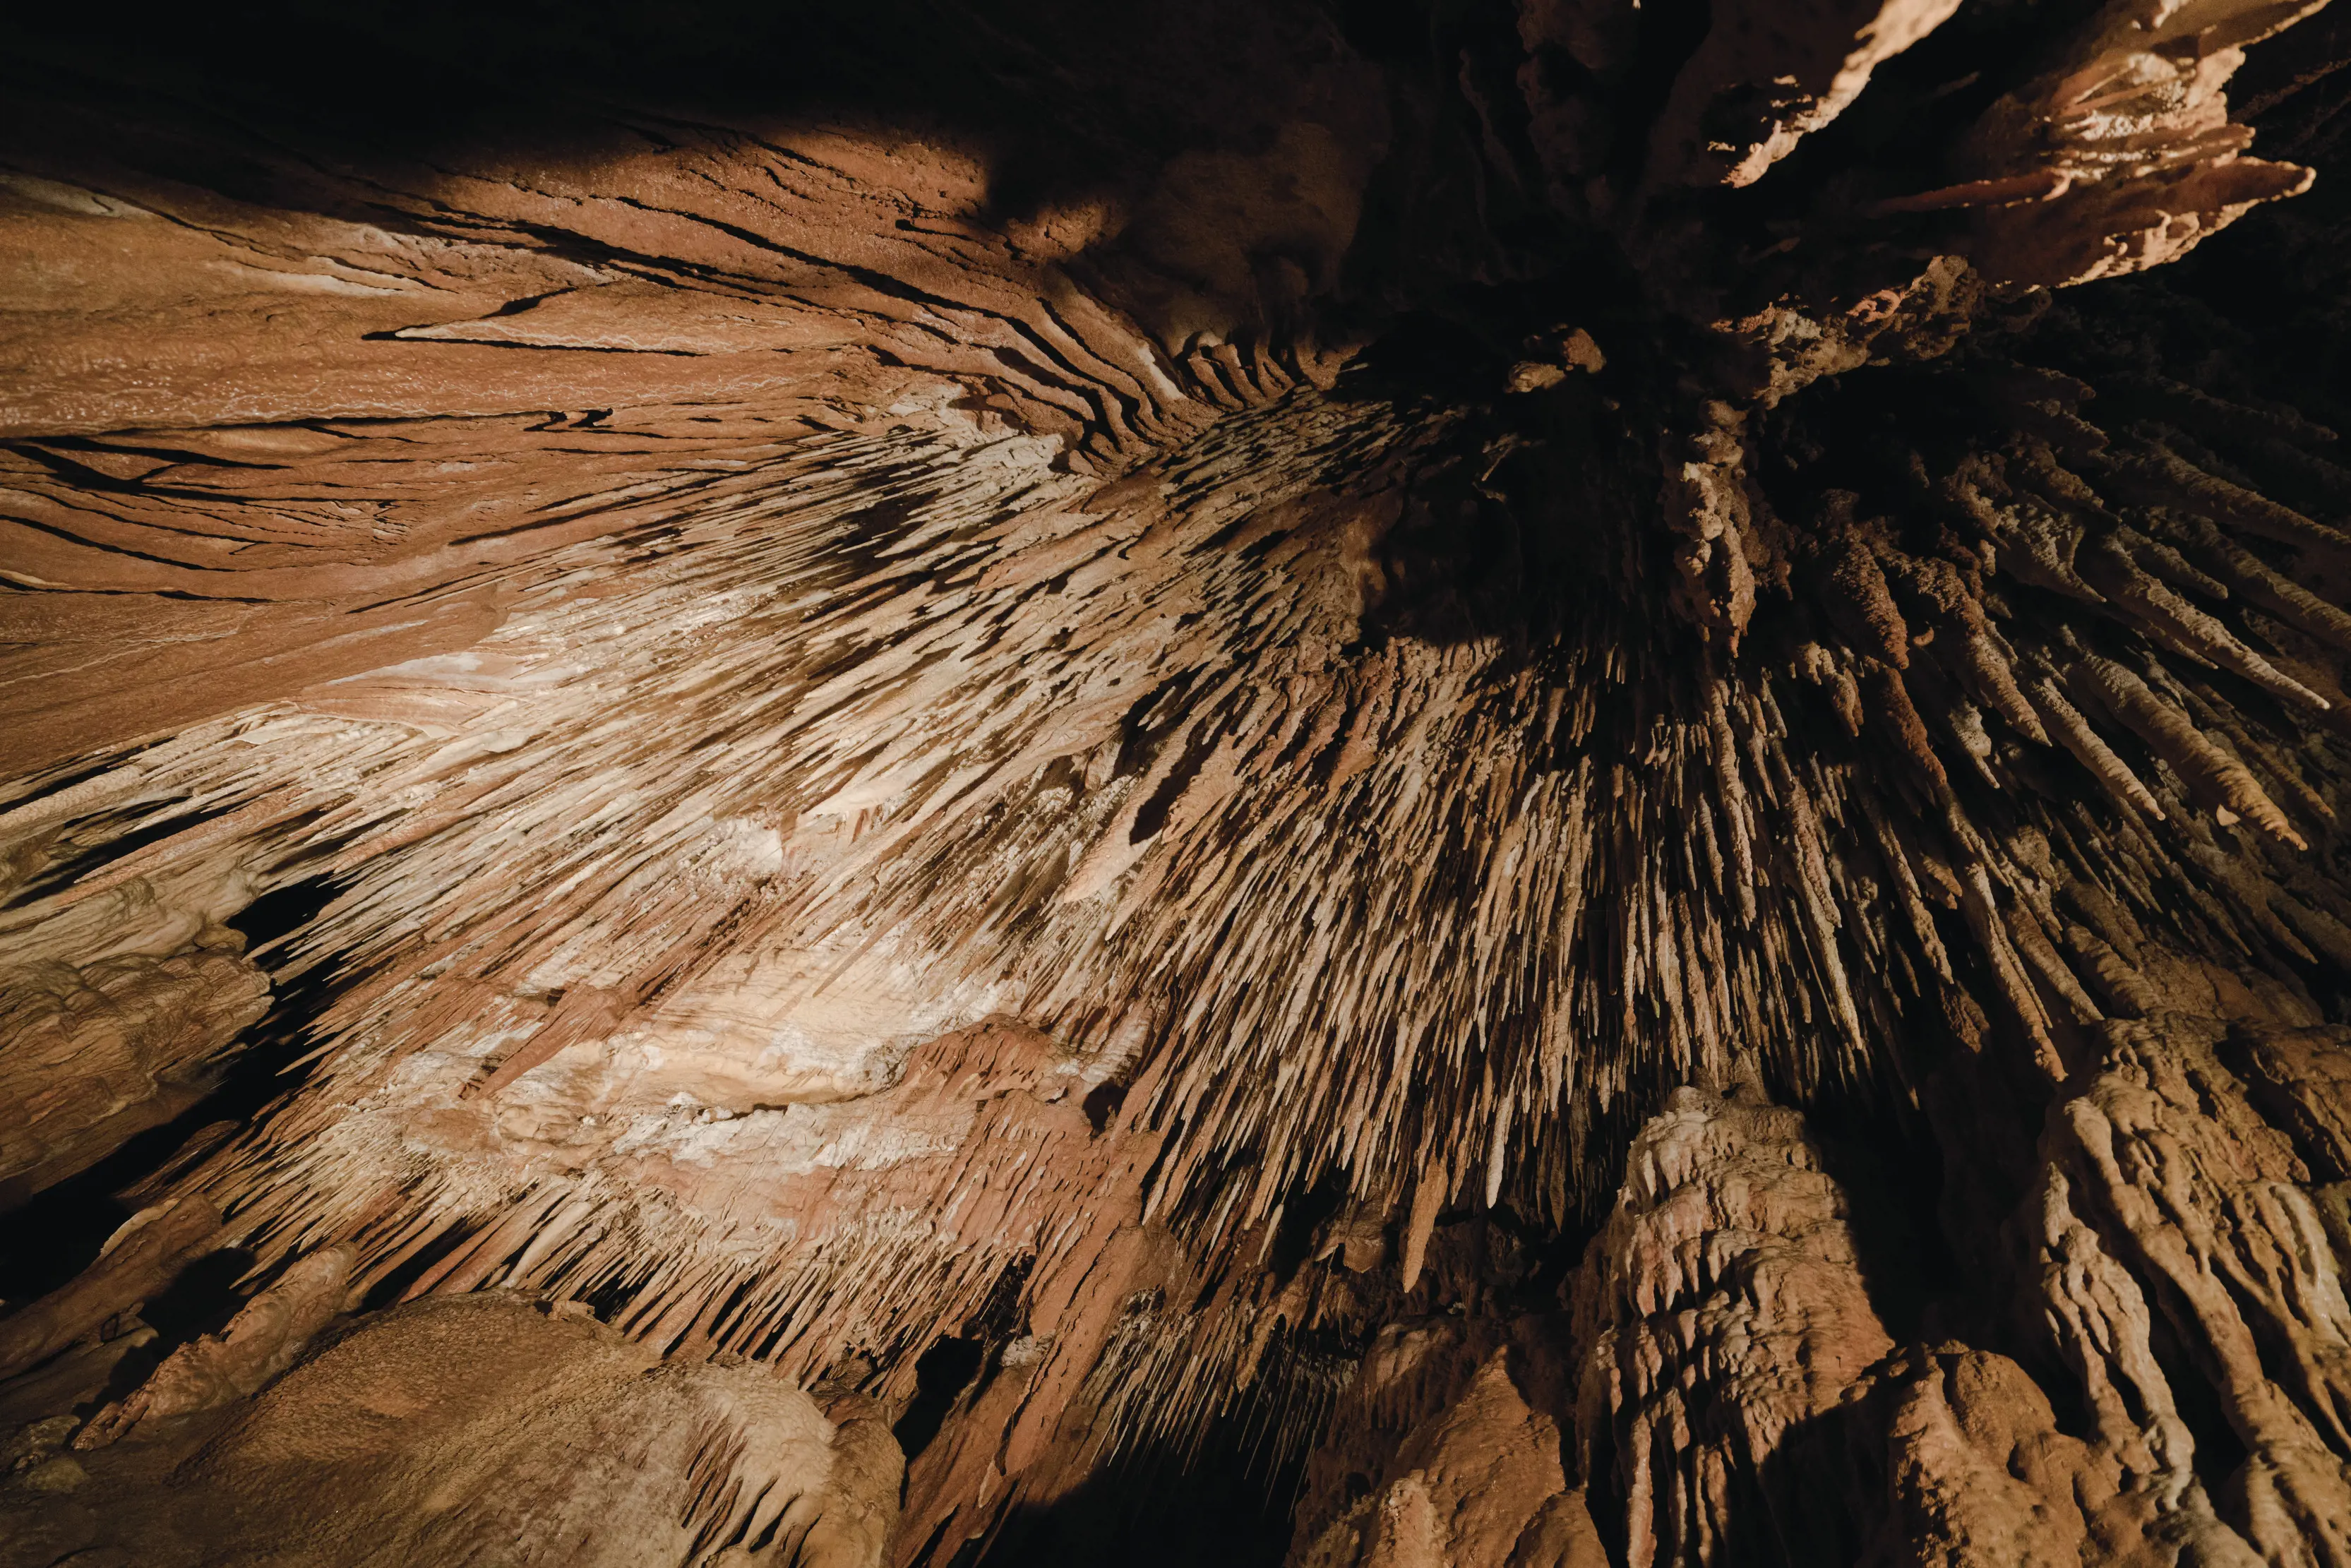 Incredible and Dramatic image of Mole Creek Caves, looking straight up at the long stalagmites.